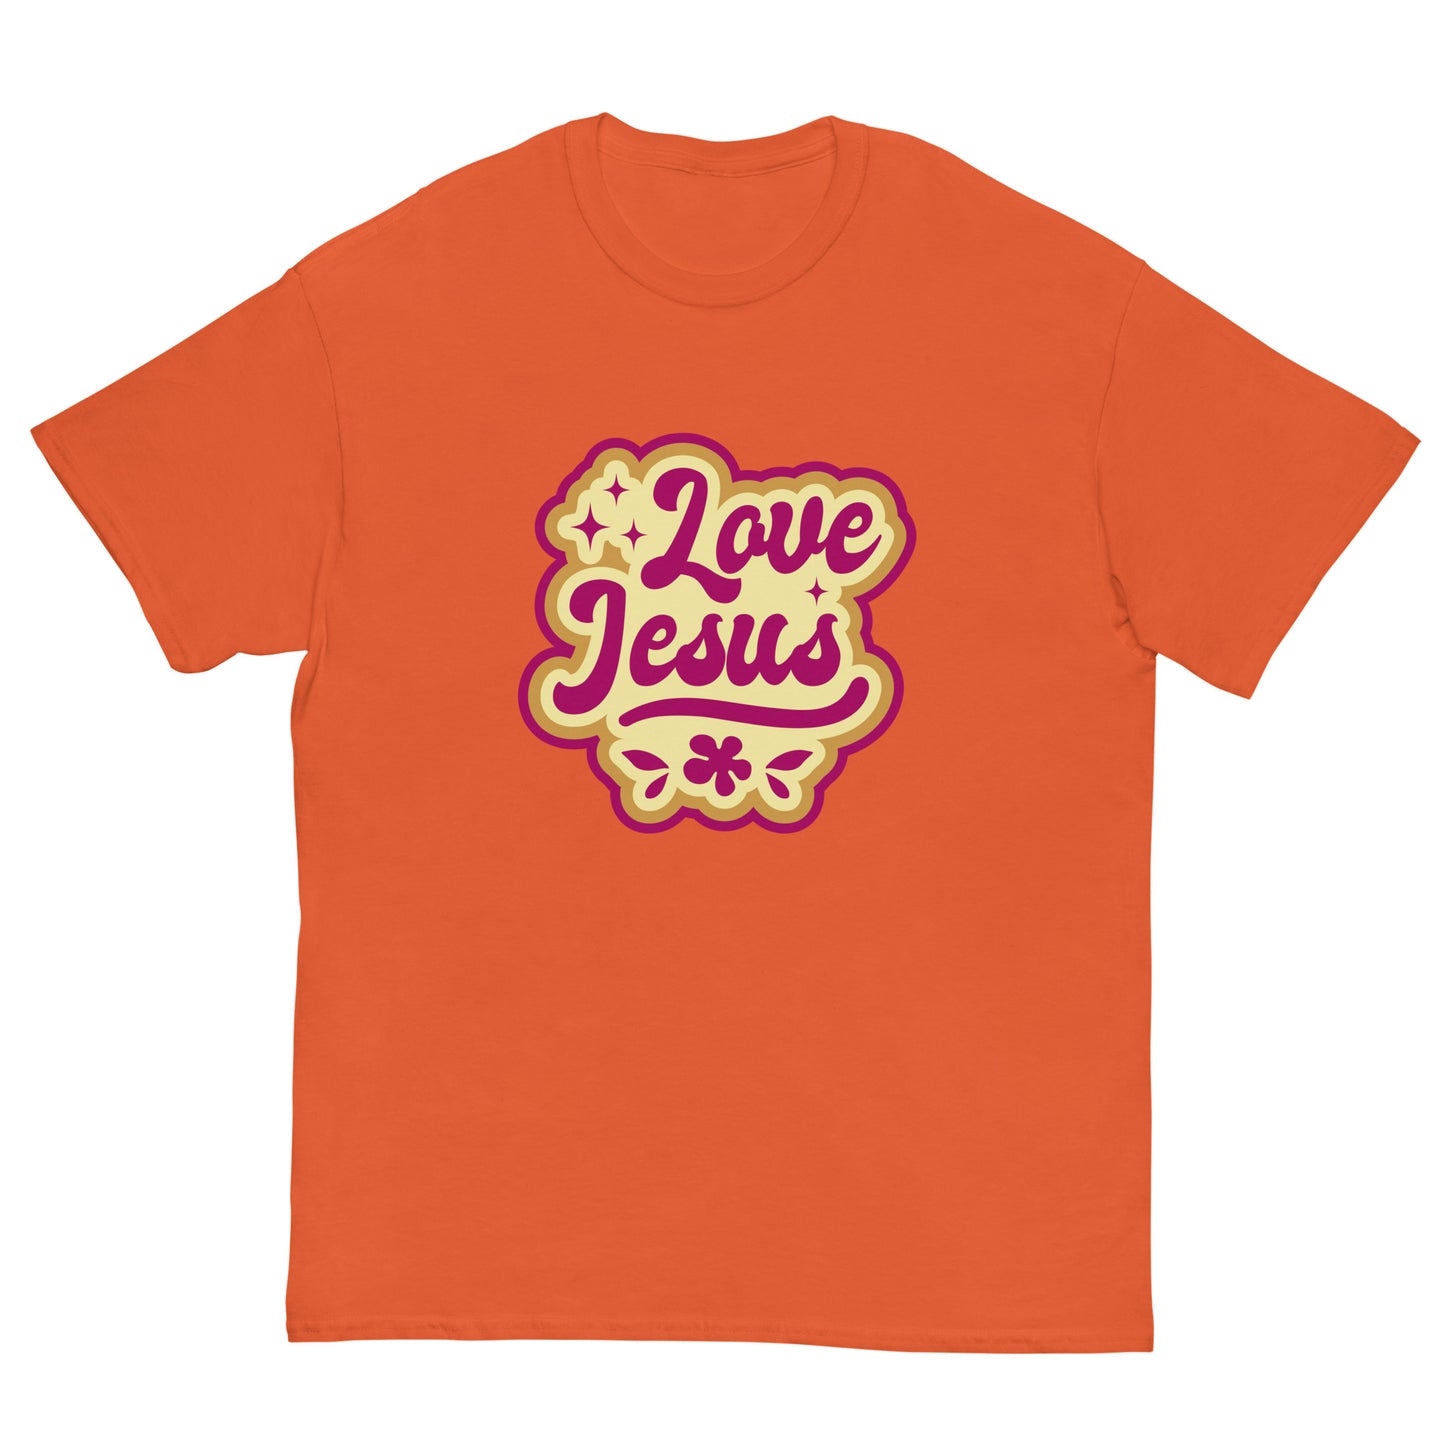 Love Jesus (Front)